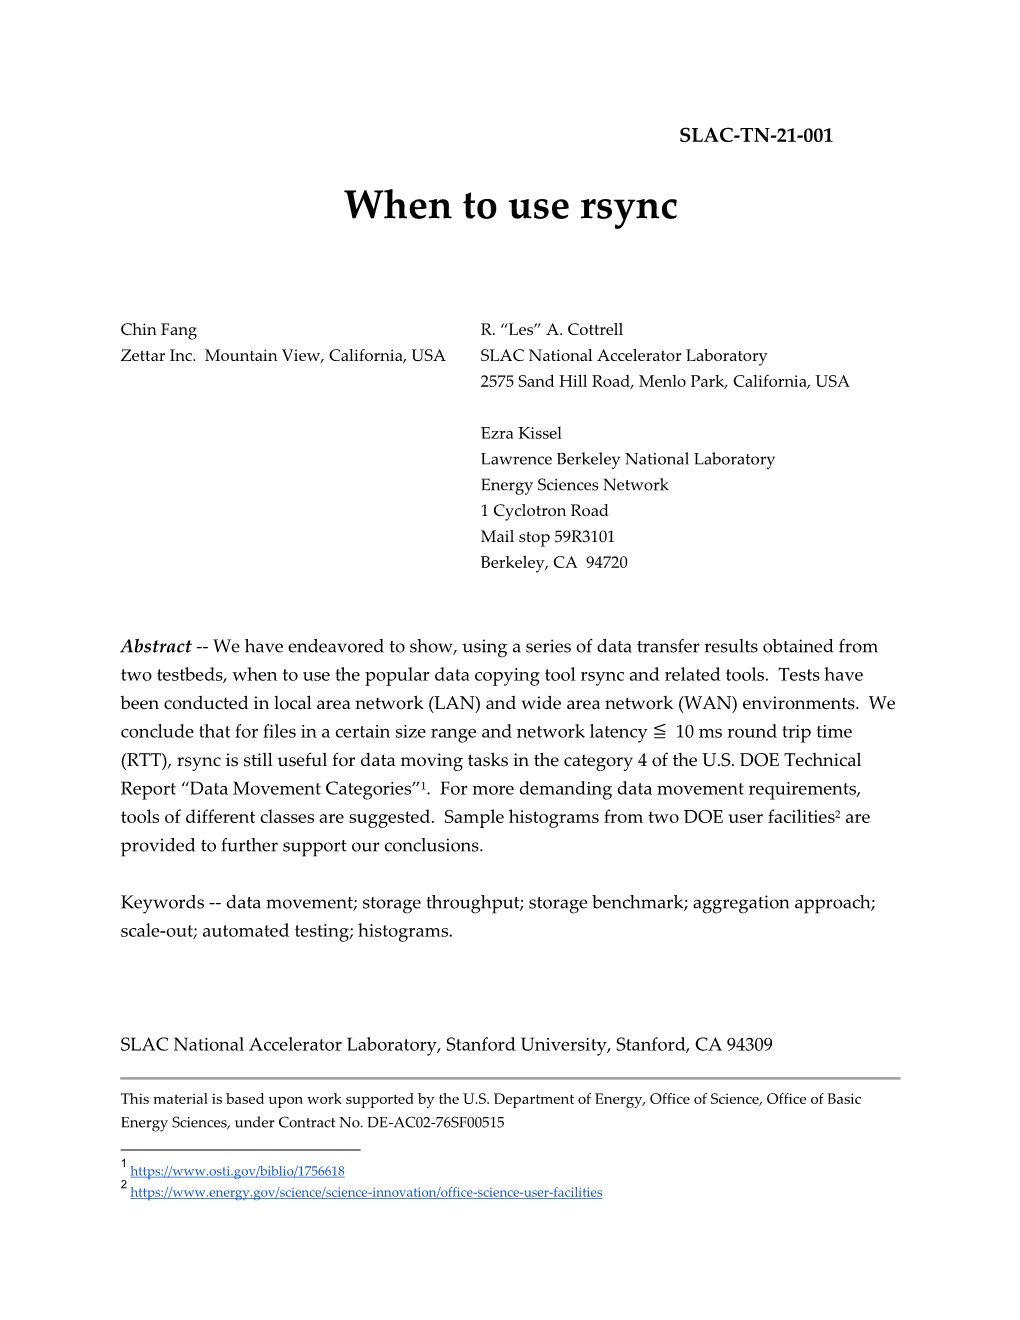 When to Use Rsync